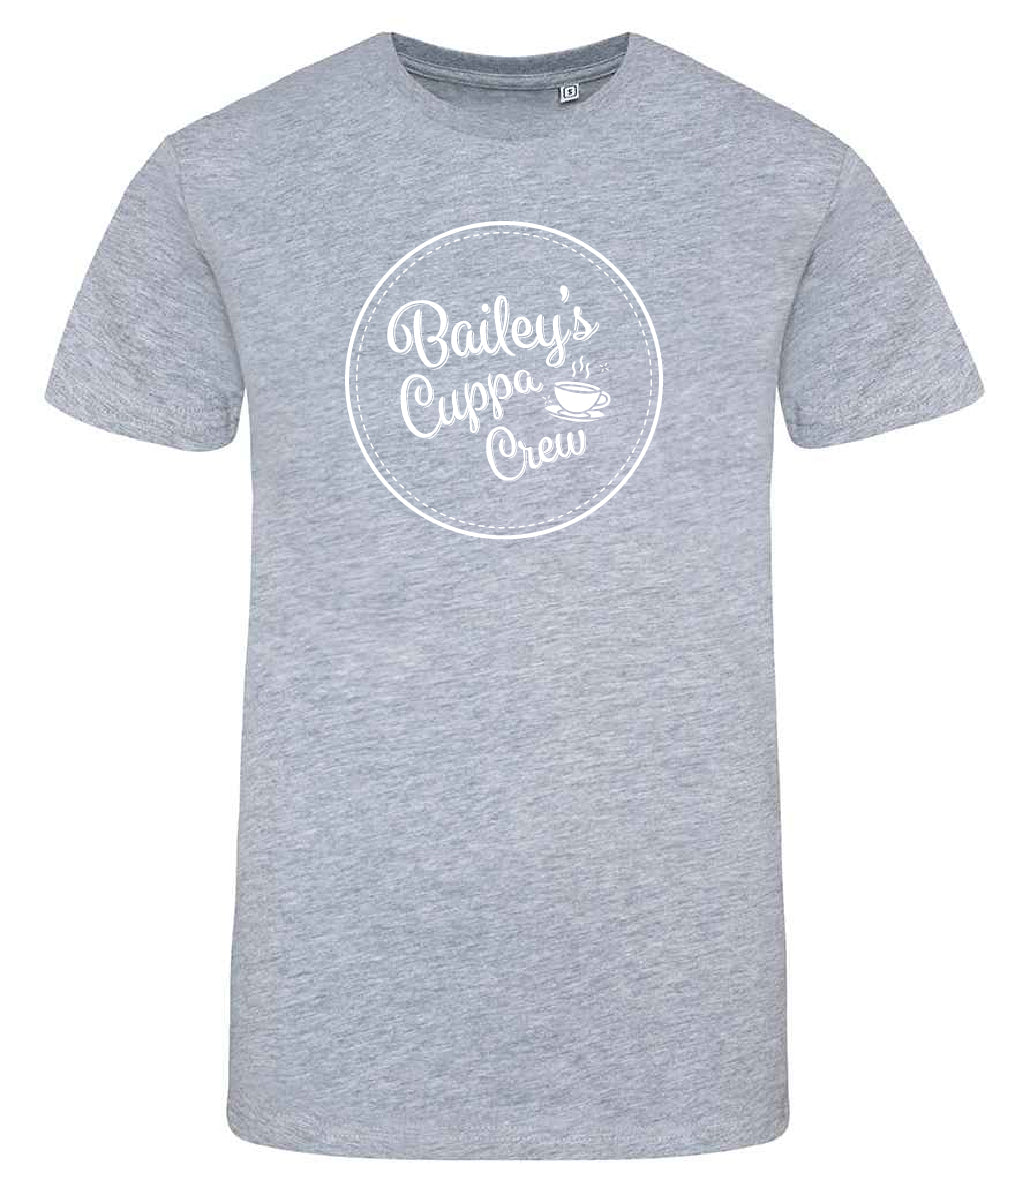 Bailey's Cuppa Crew Large Logo T-Shirt